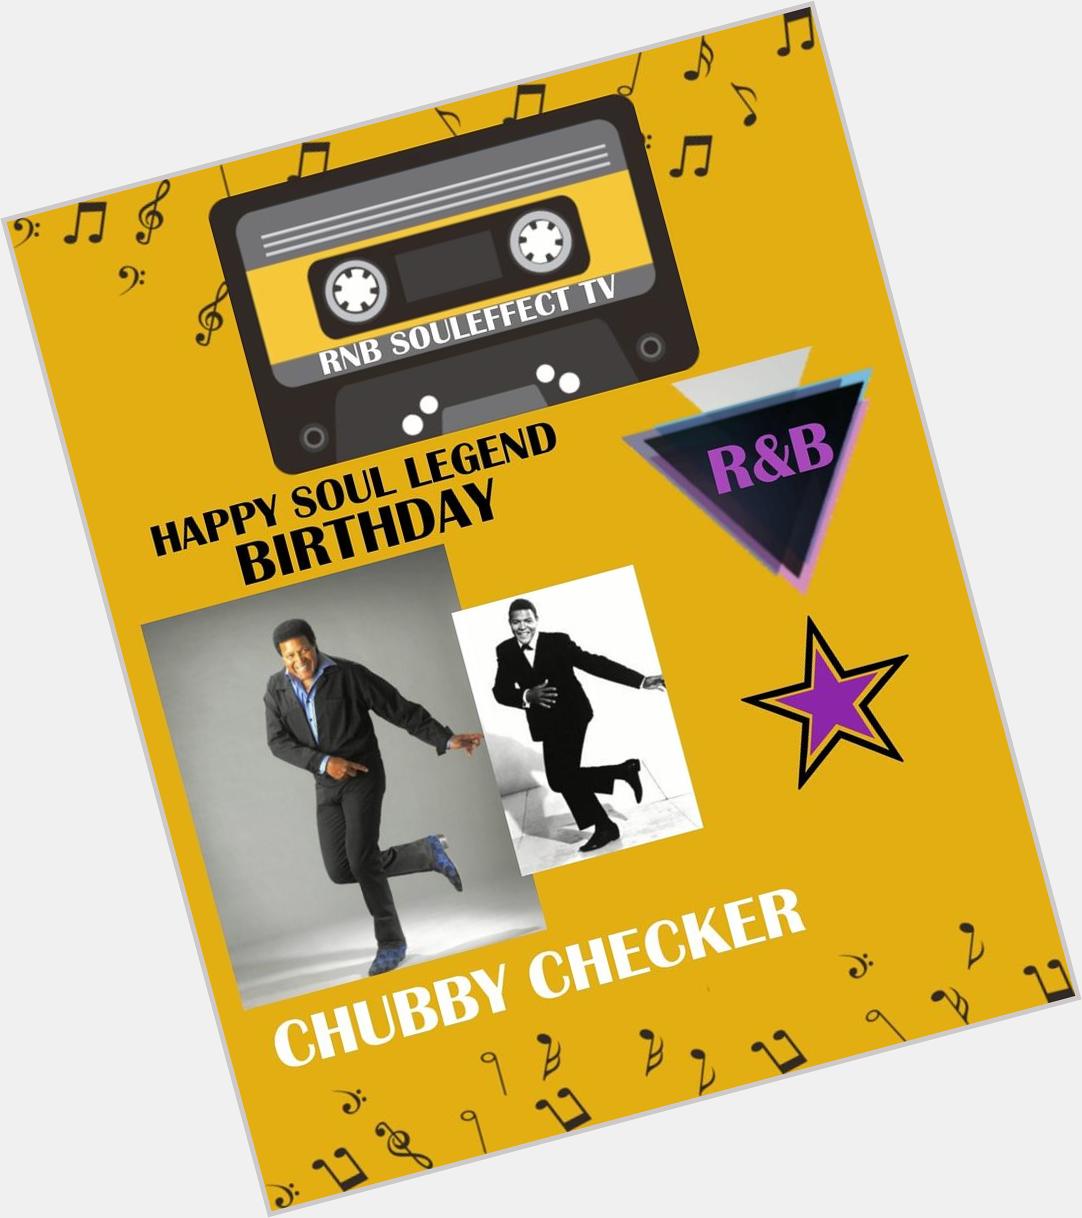 Happy Soul Legend Birthday Chubby Checker      